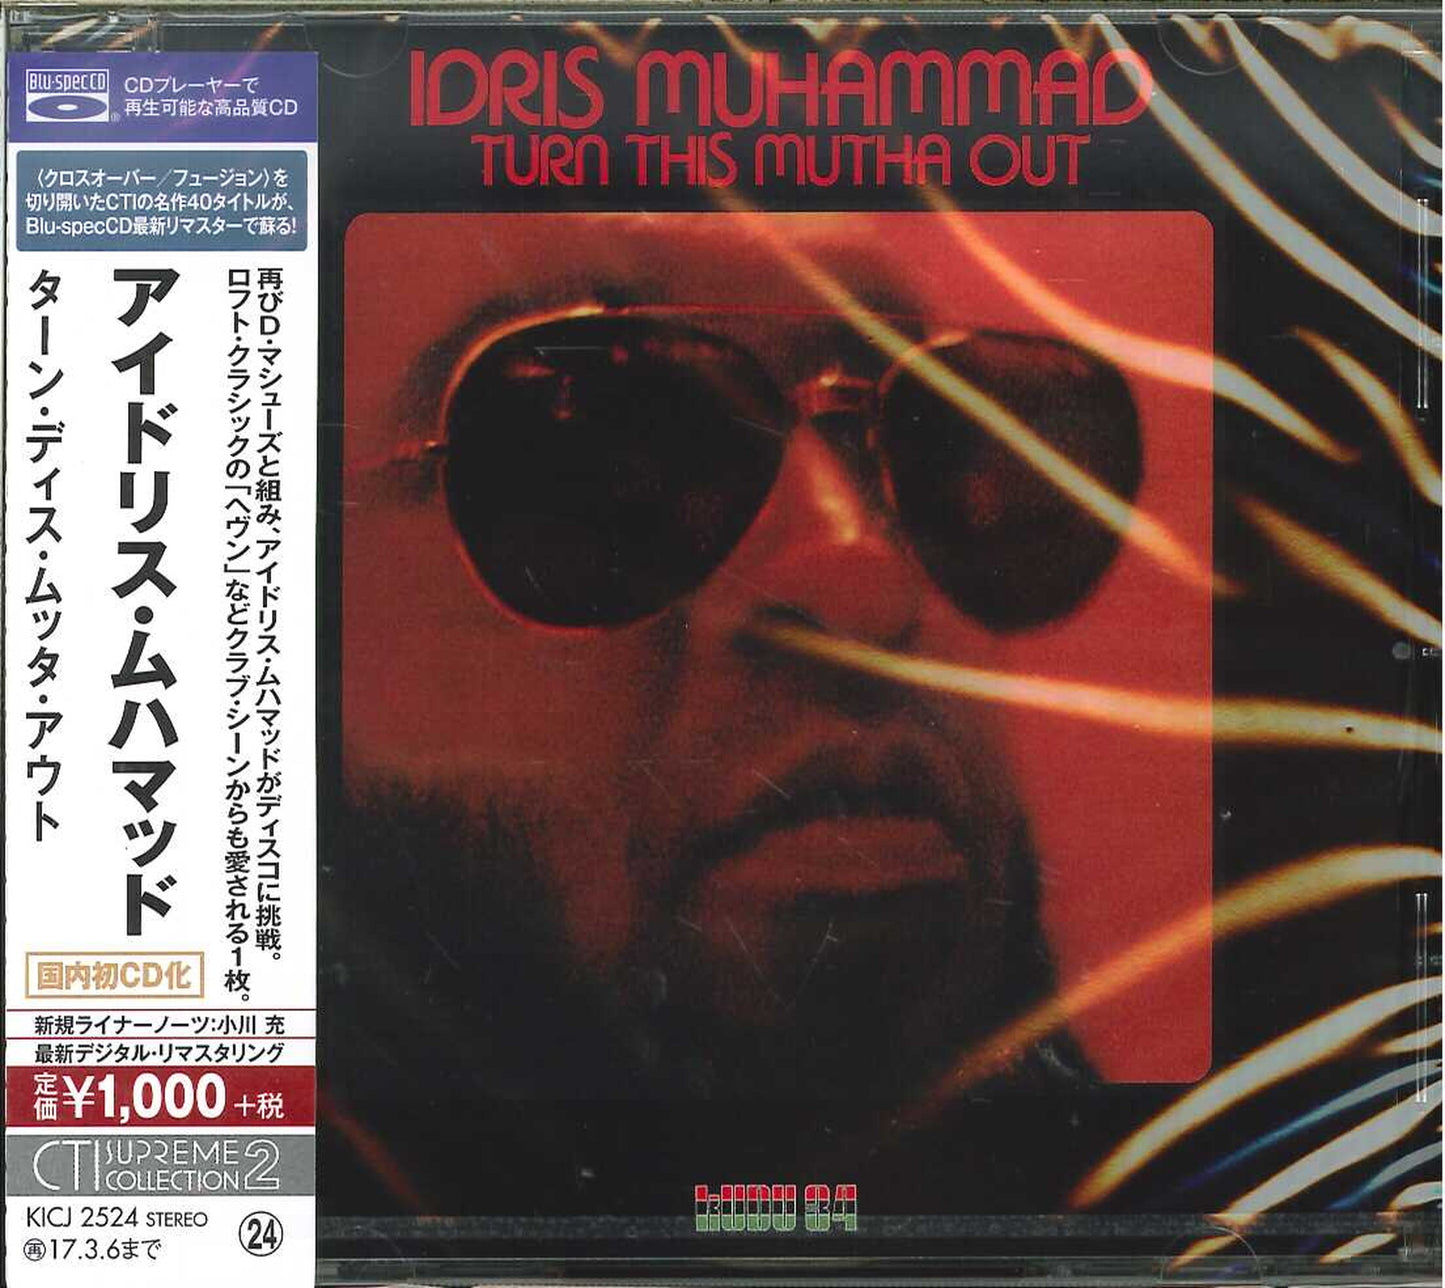 Idris Muhammad - Turn This Mutha Out - Japan  Blu-spec CD